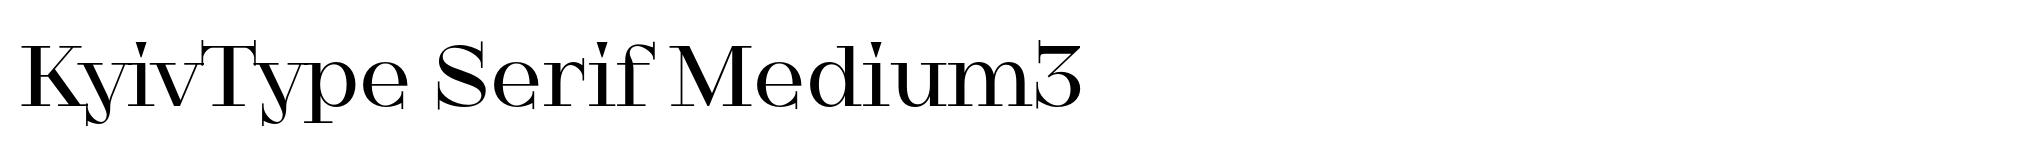 KyivType Serif Medium3 image